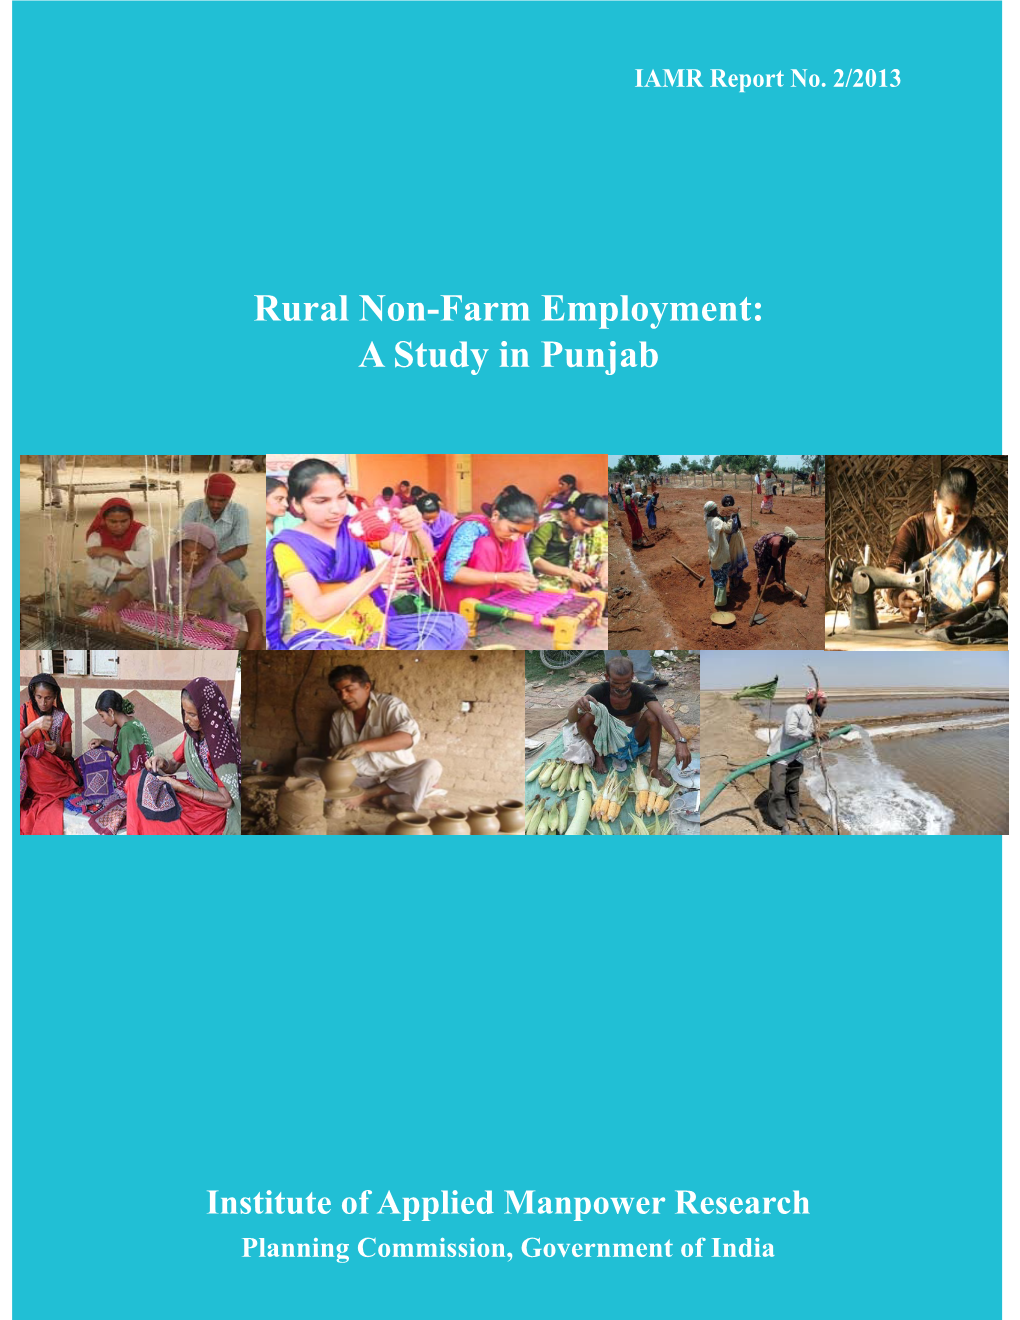 Rural Non-Farm Employment: a Study in Punjab